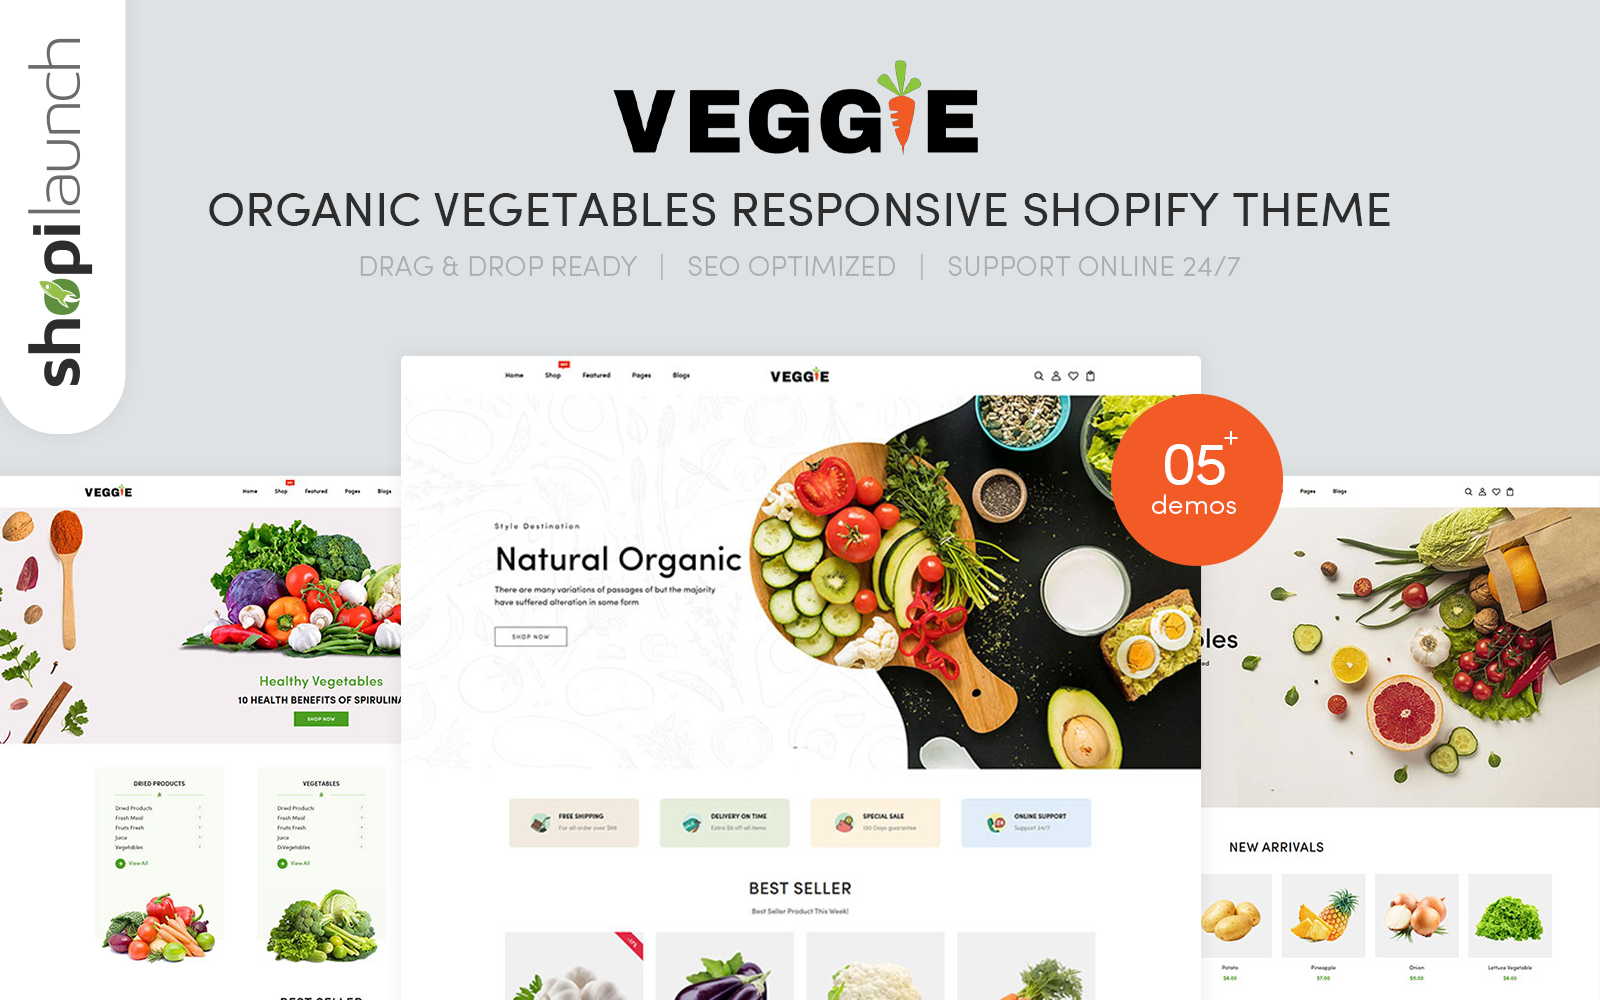 Vegge - Organic Vegetables Responsive Shopify Theme